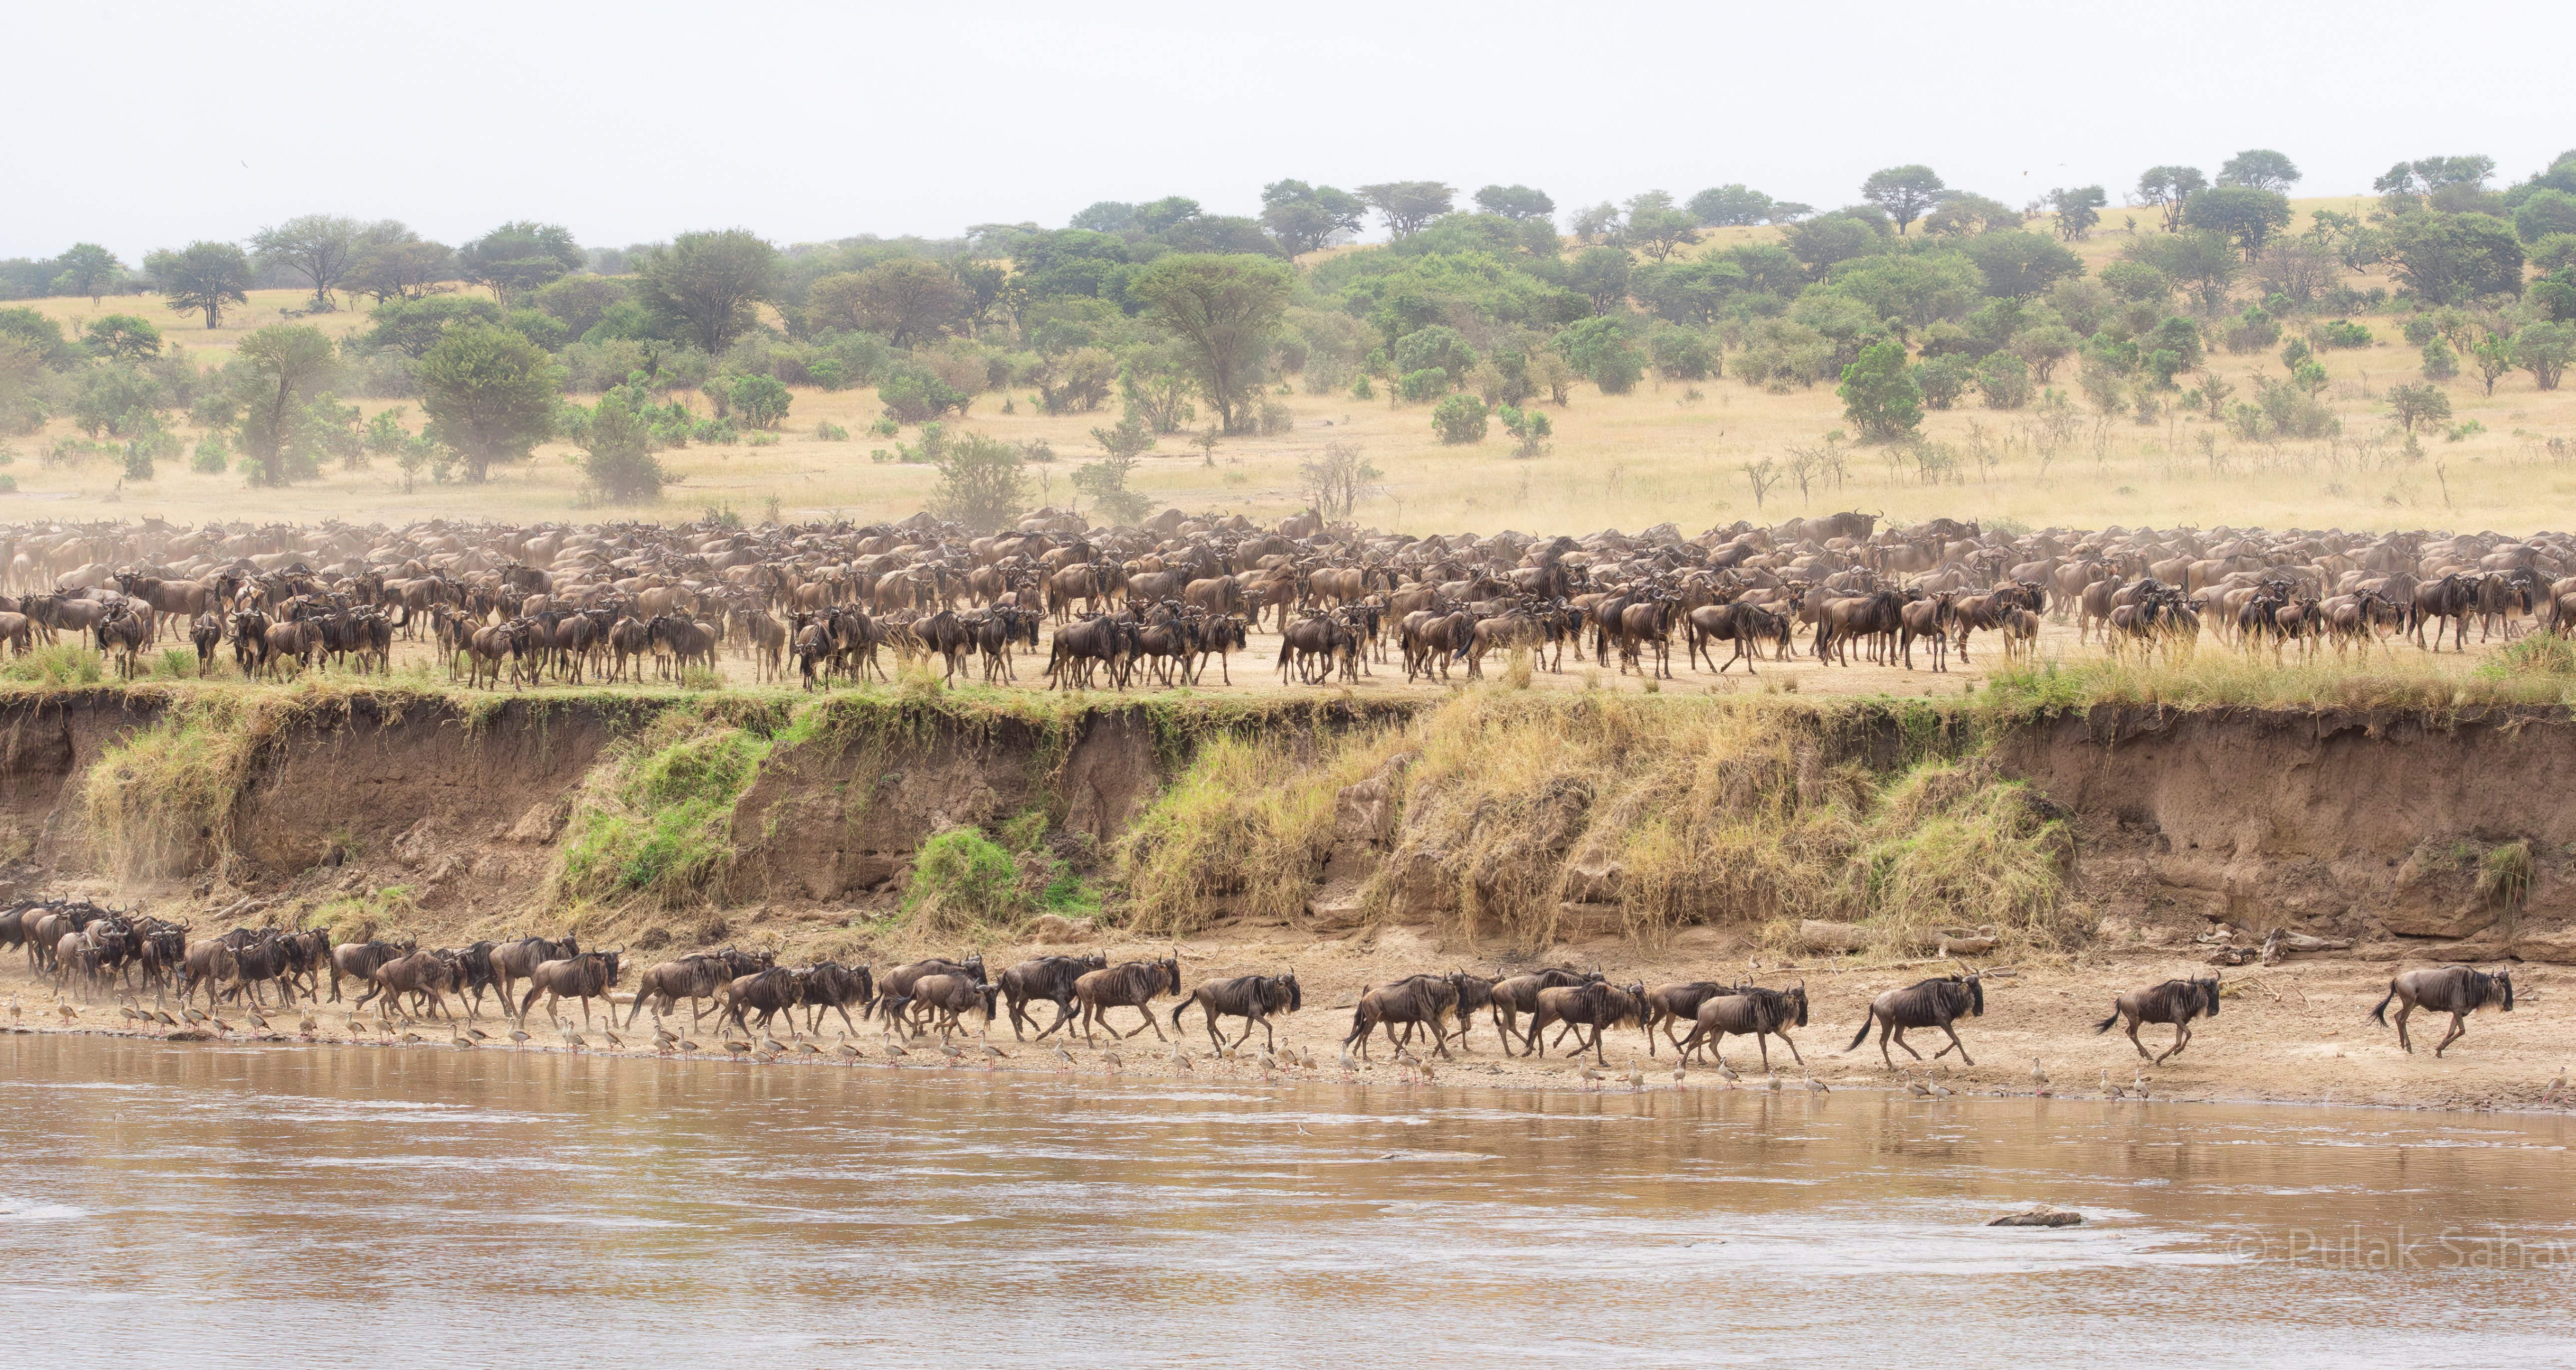 Two tier wildebeest migration